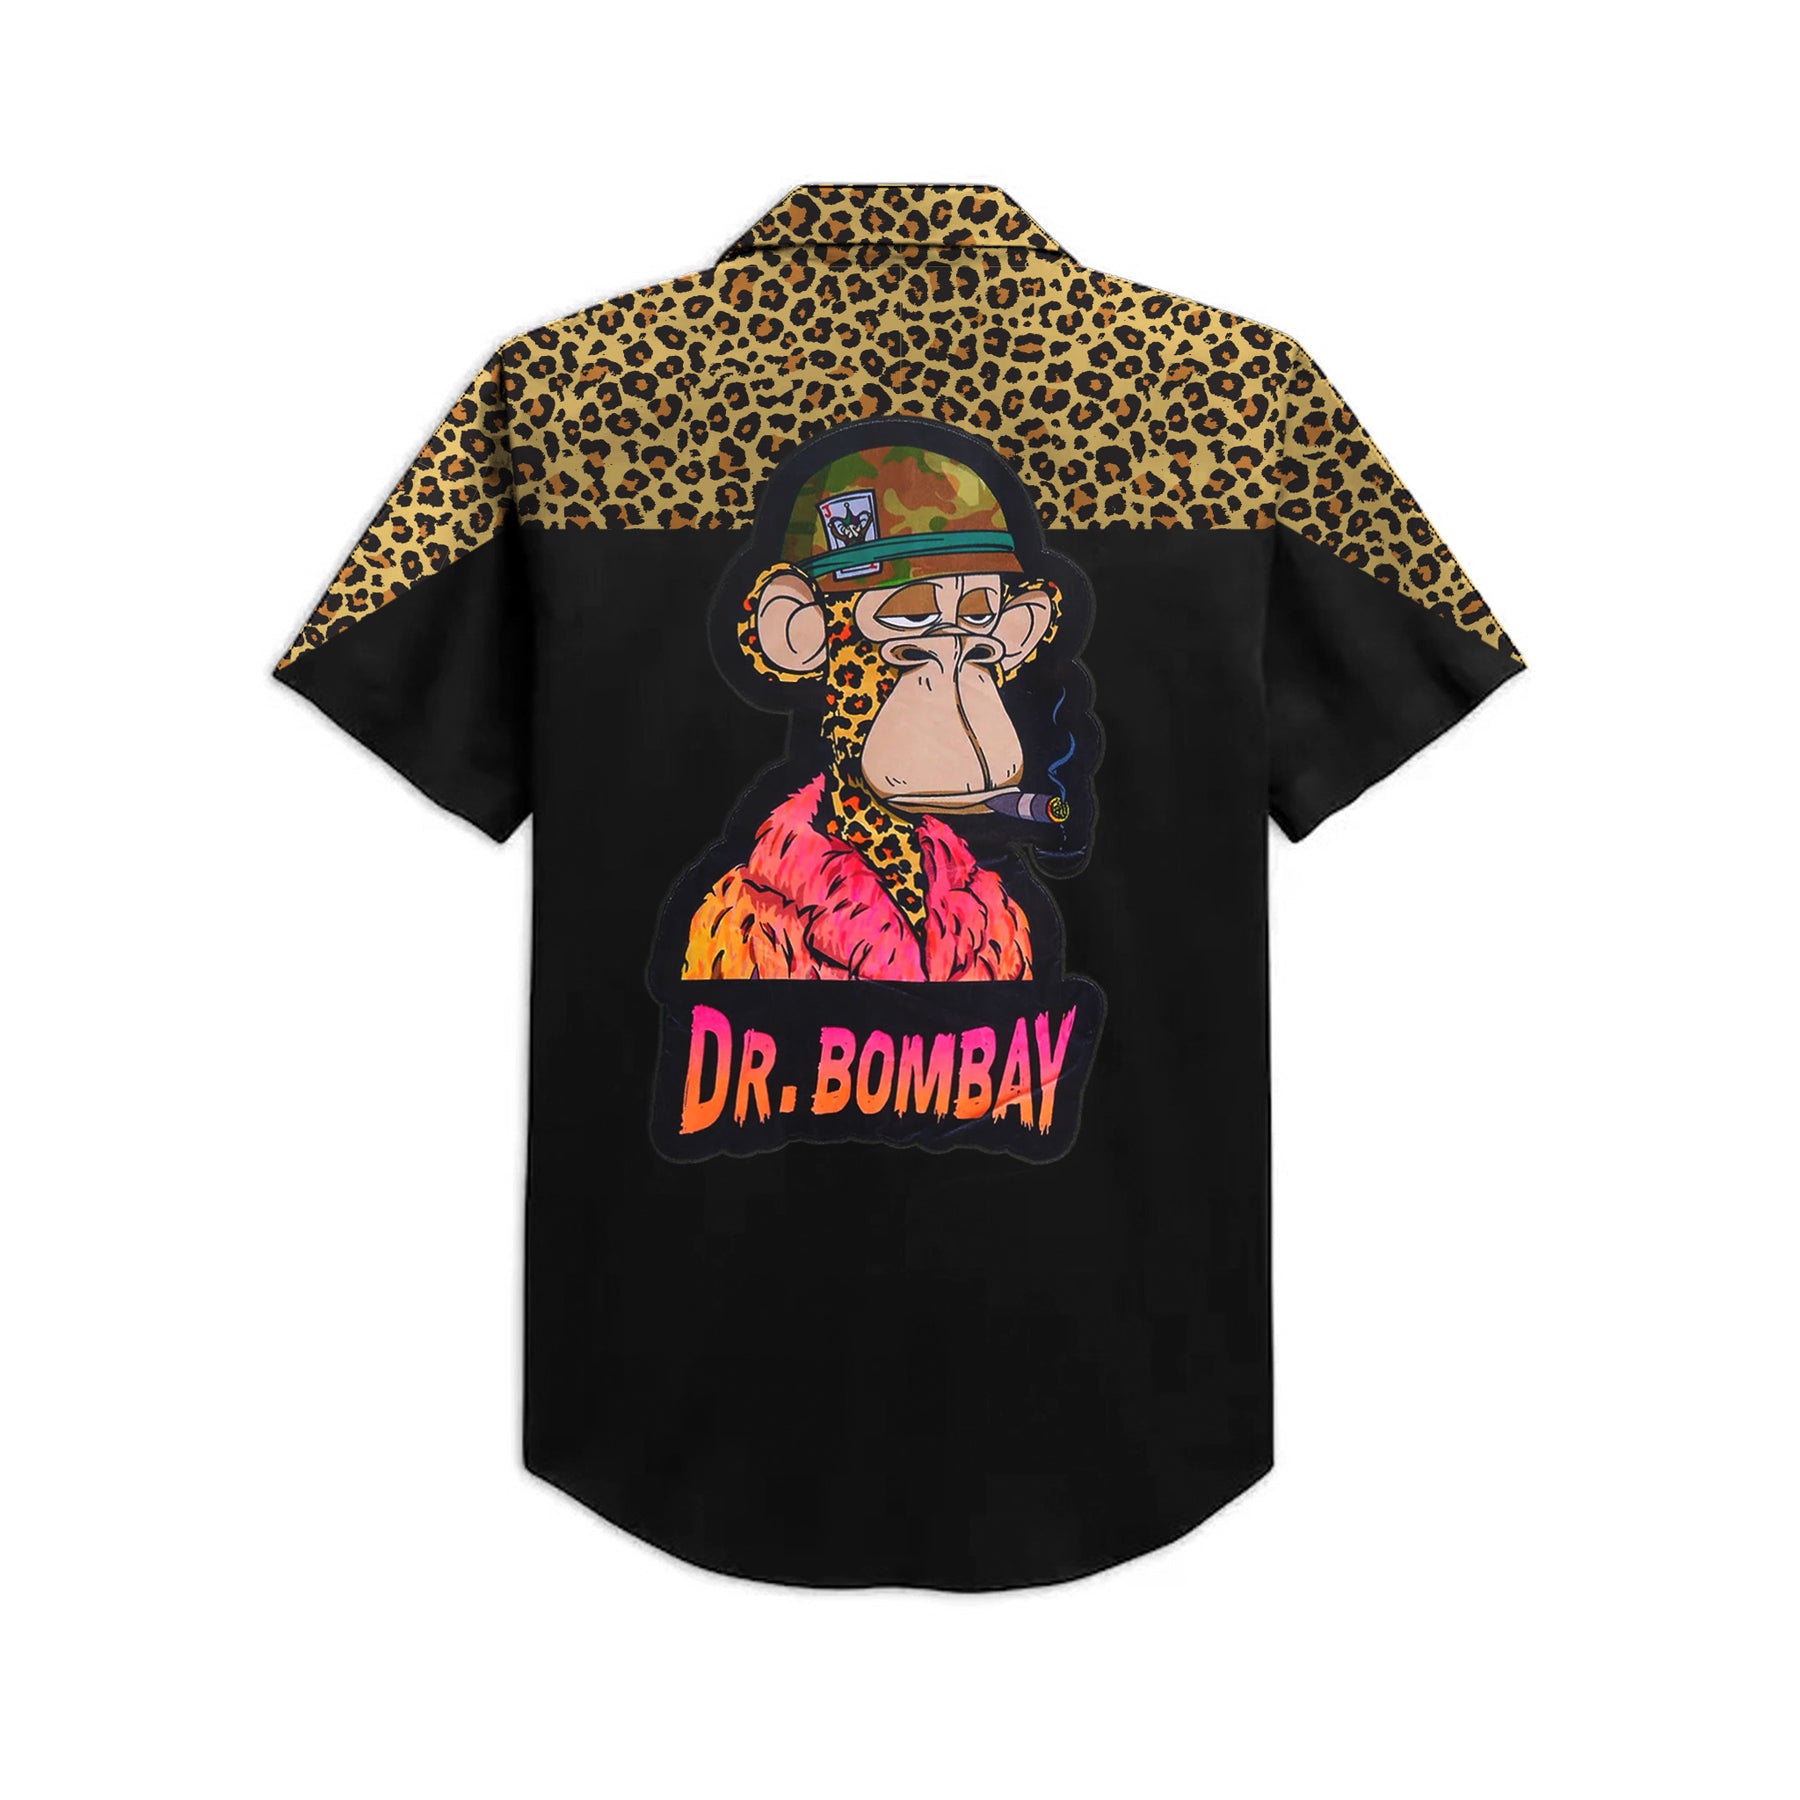 Dr. Bombay Leopard Shirt